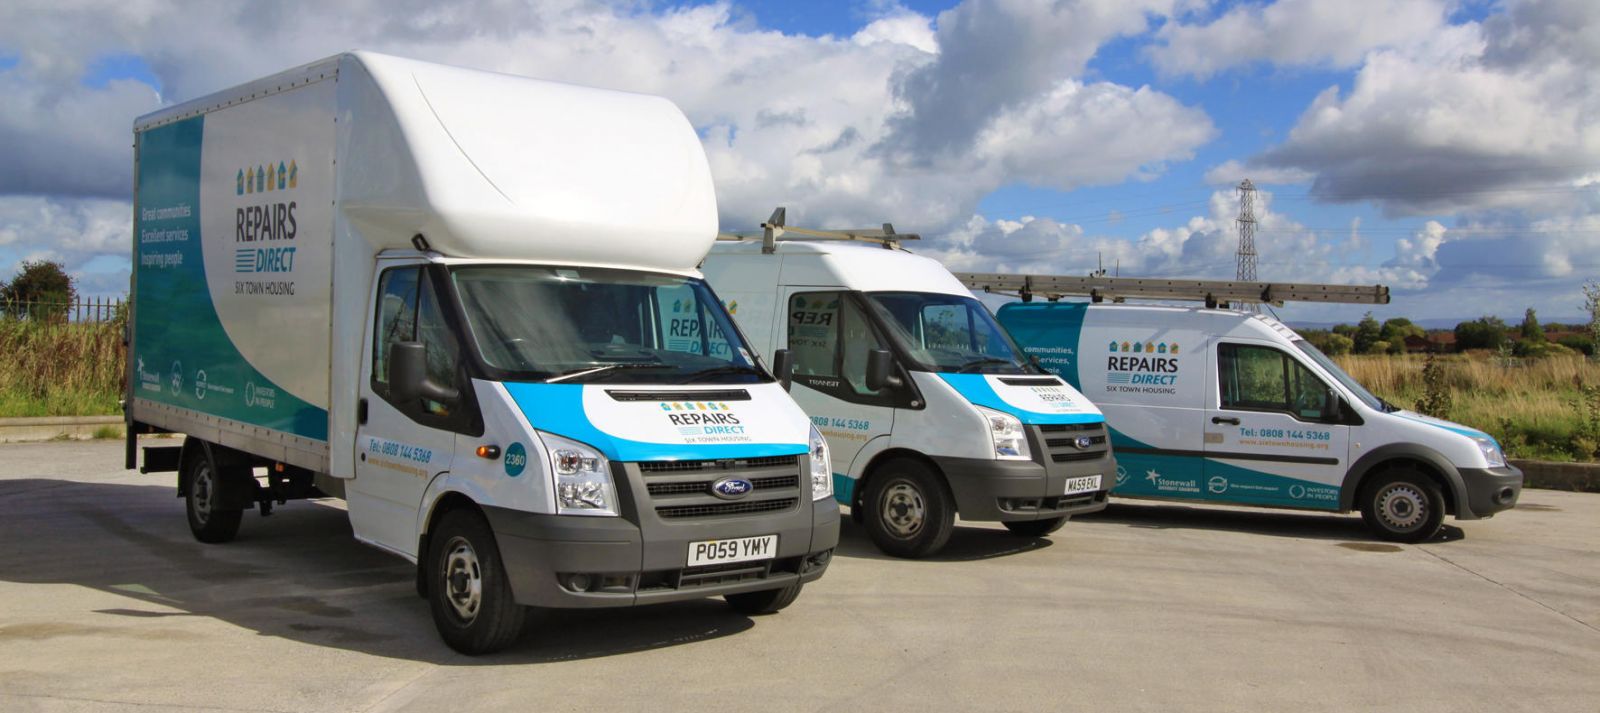 Repairs Direct vans and lorries